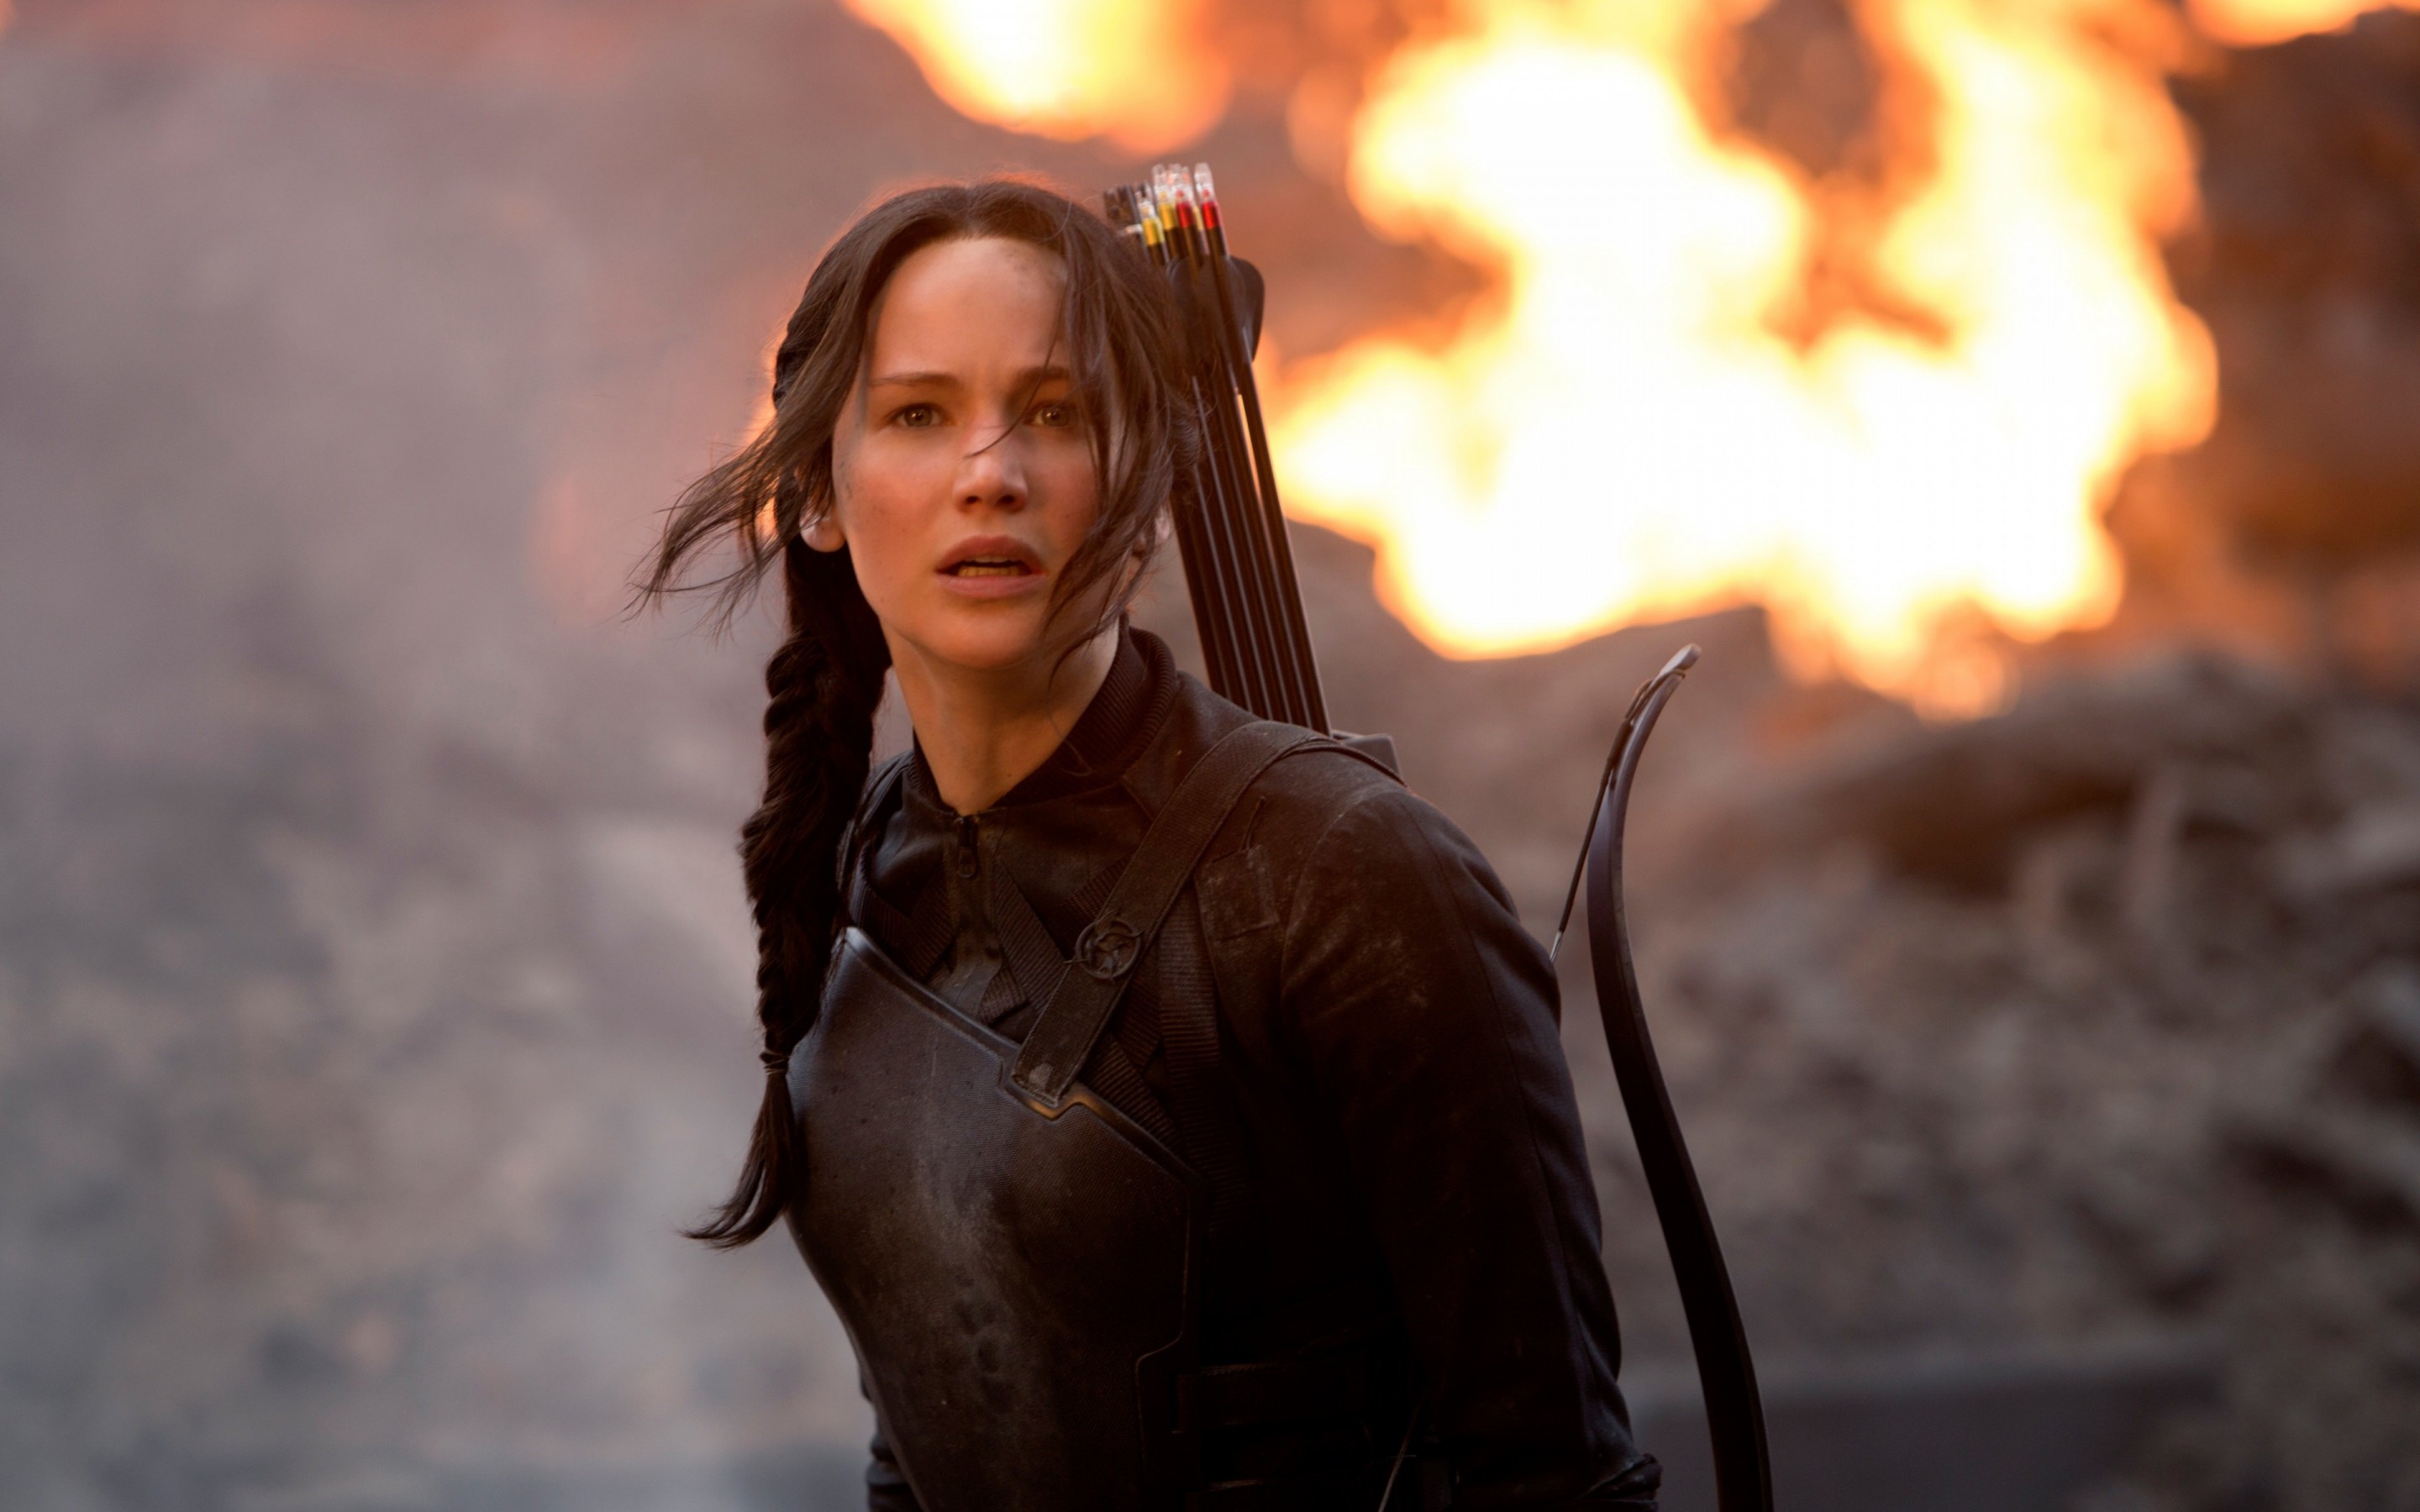 Jennifer Lawrence in The Hunger Games Wallpaper for Desktop 2880x1800